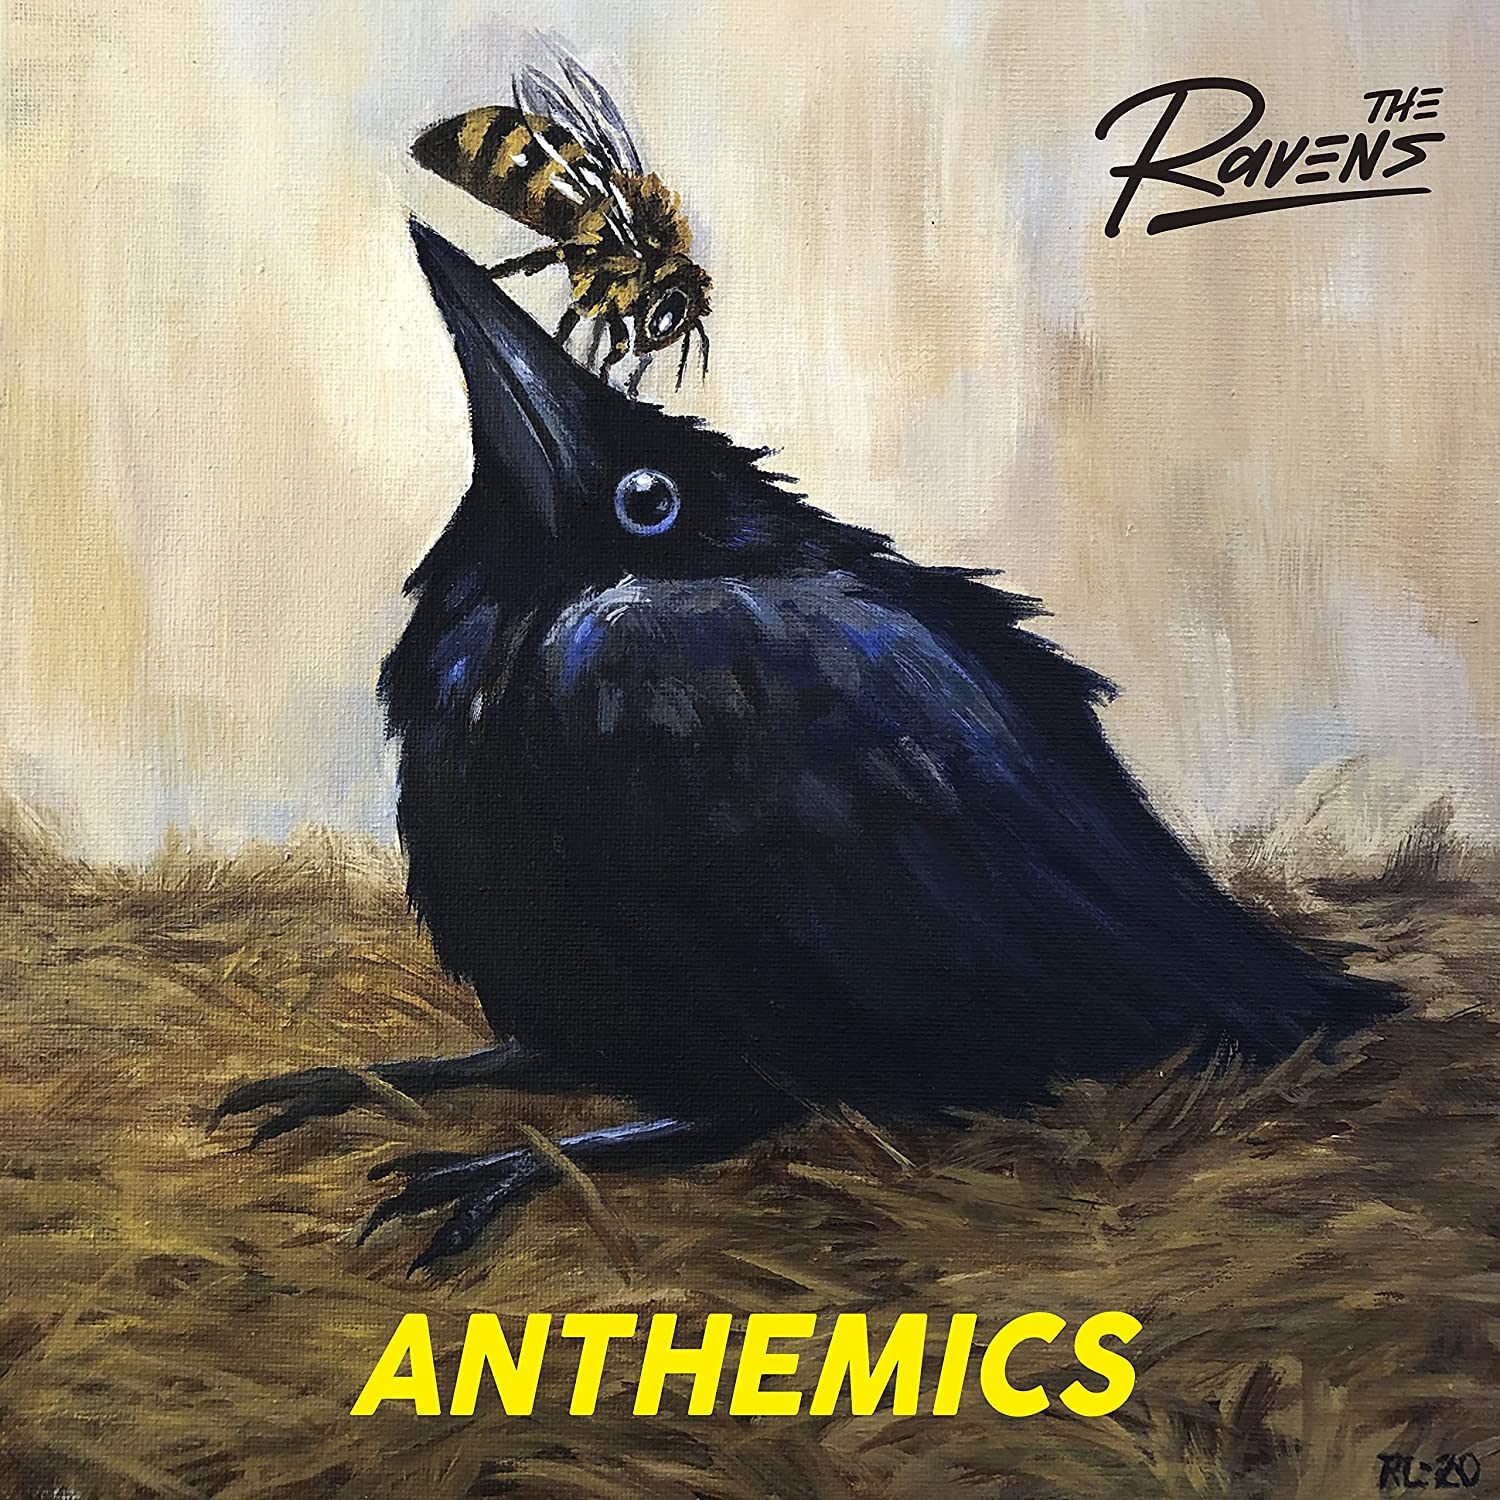 The Ravens/ANTHEMICS